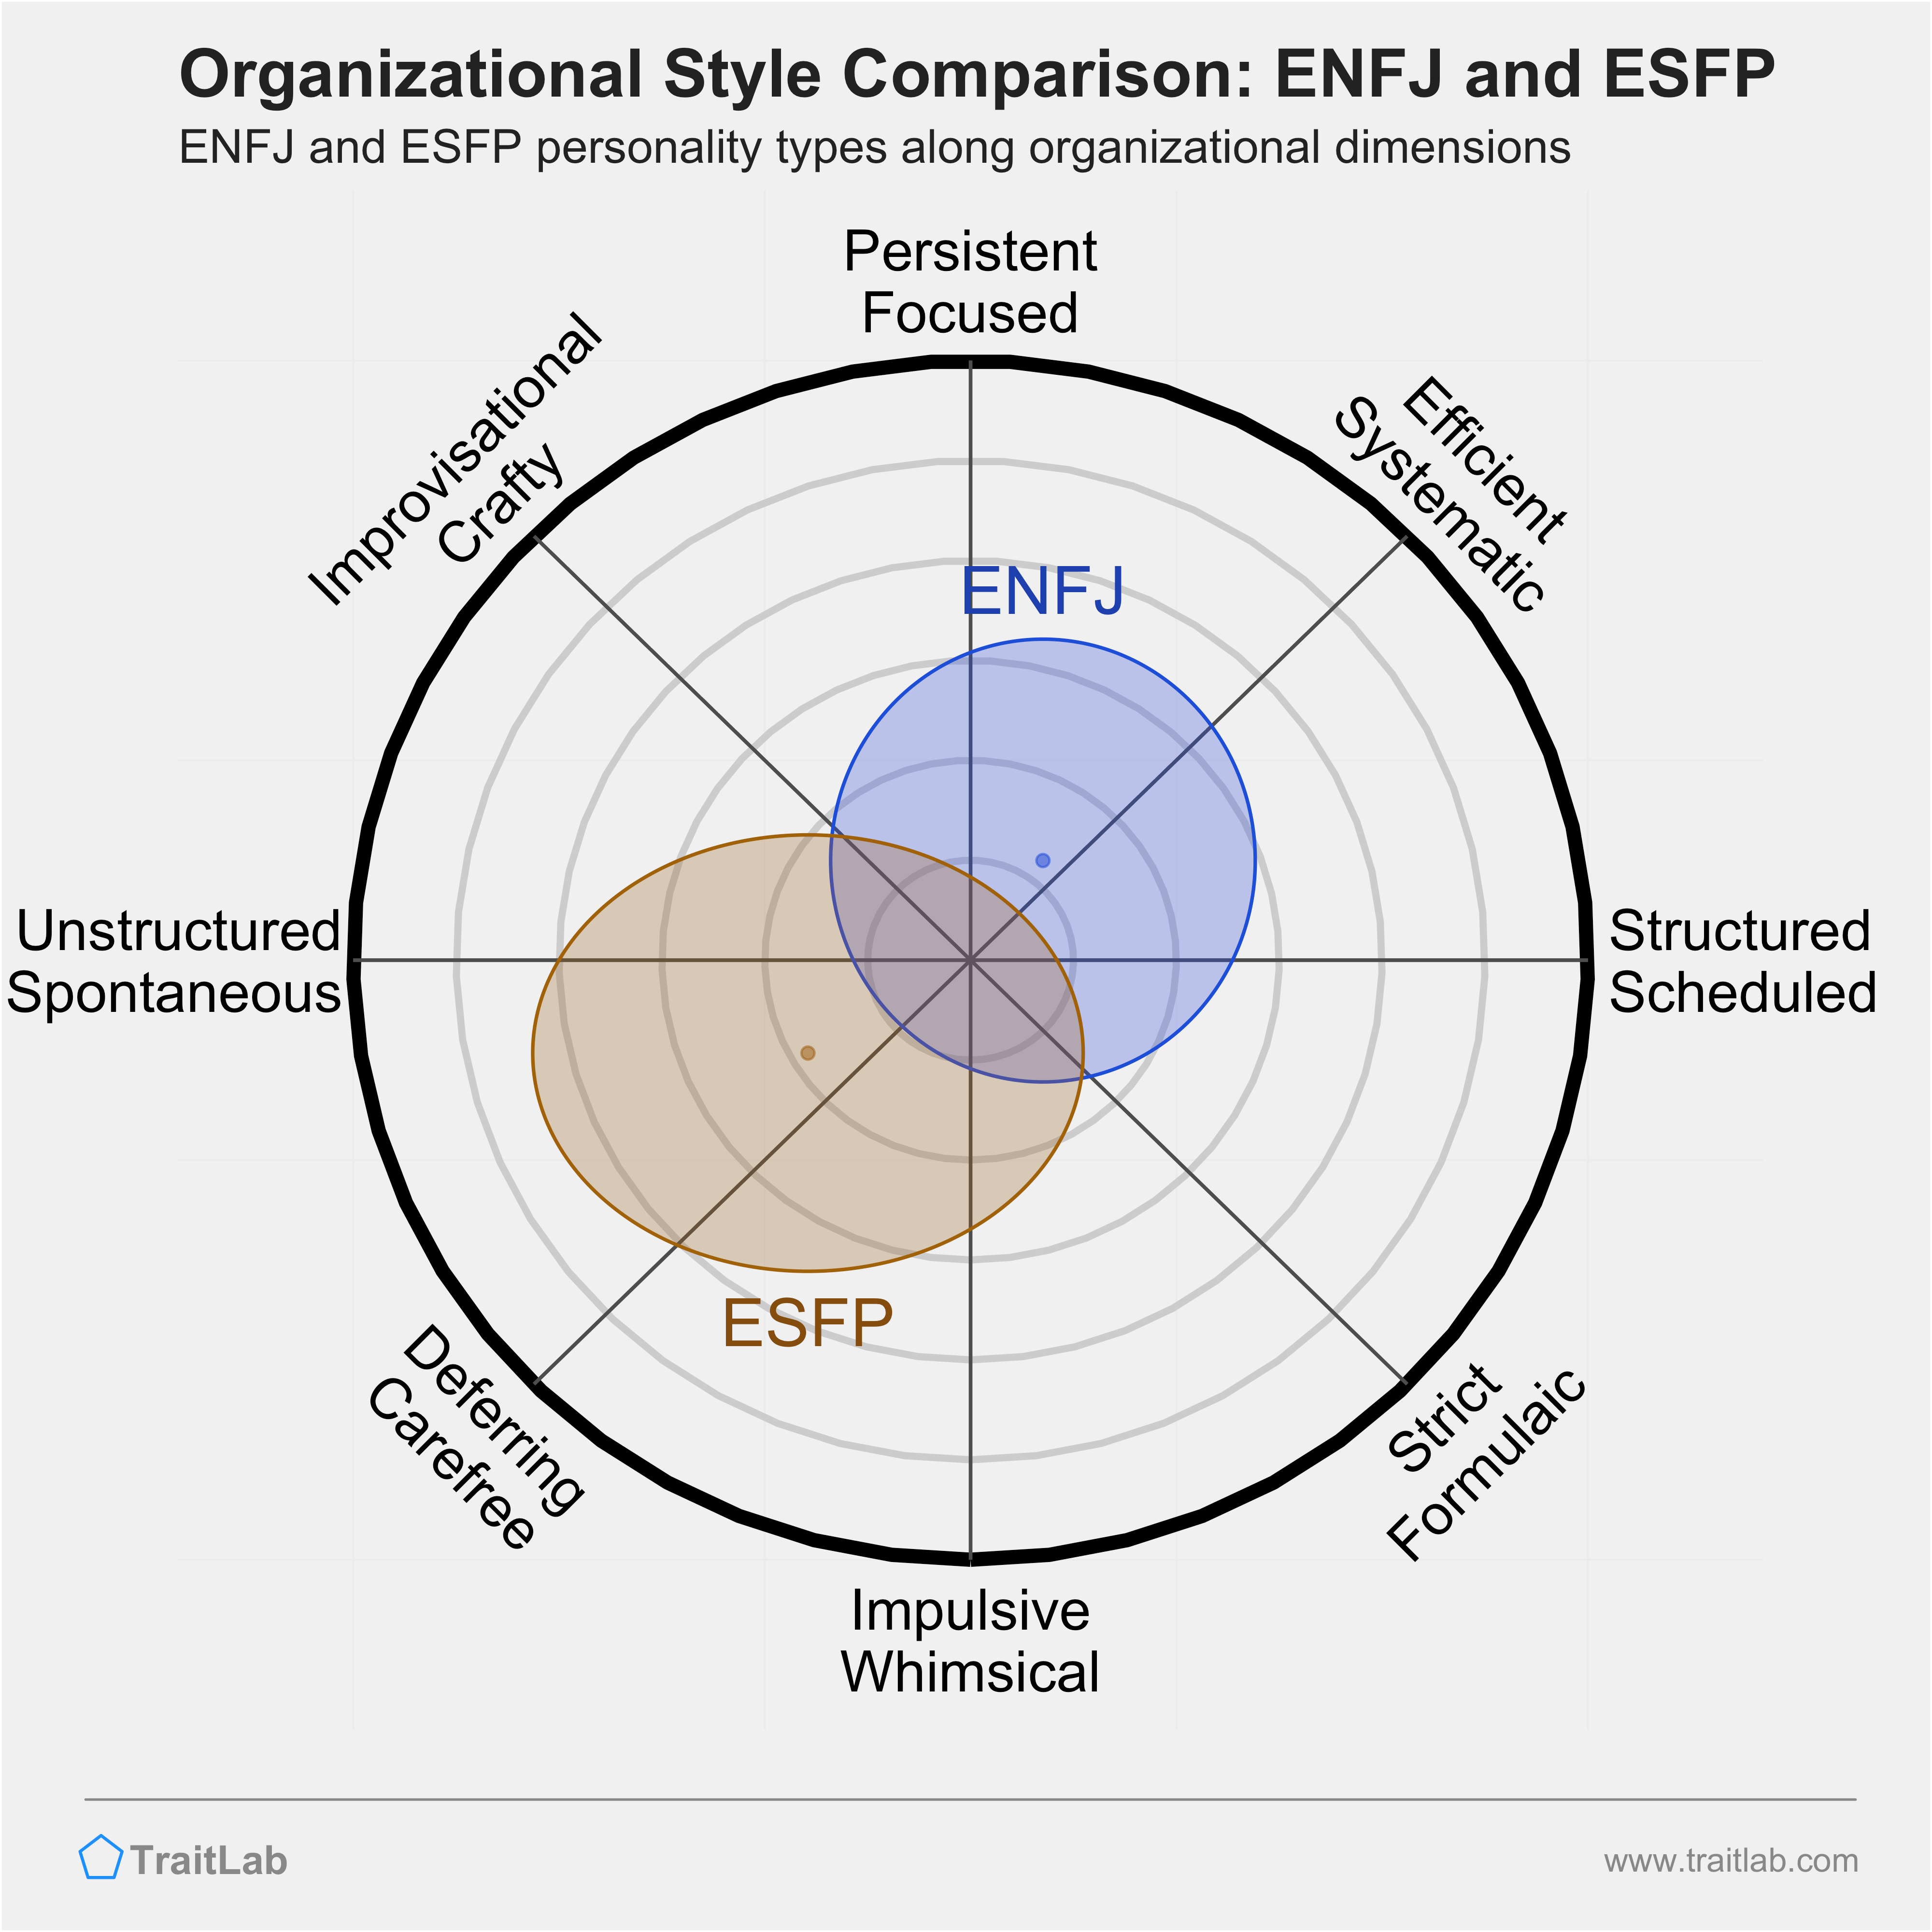 ENFJ and ESFP comparison across organizational dimensions